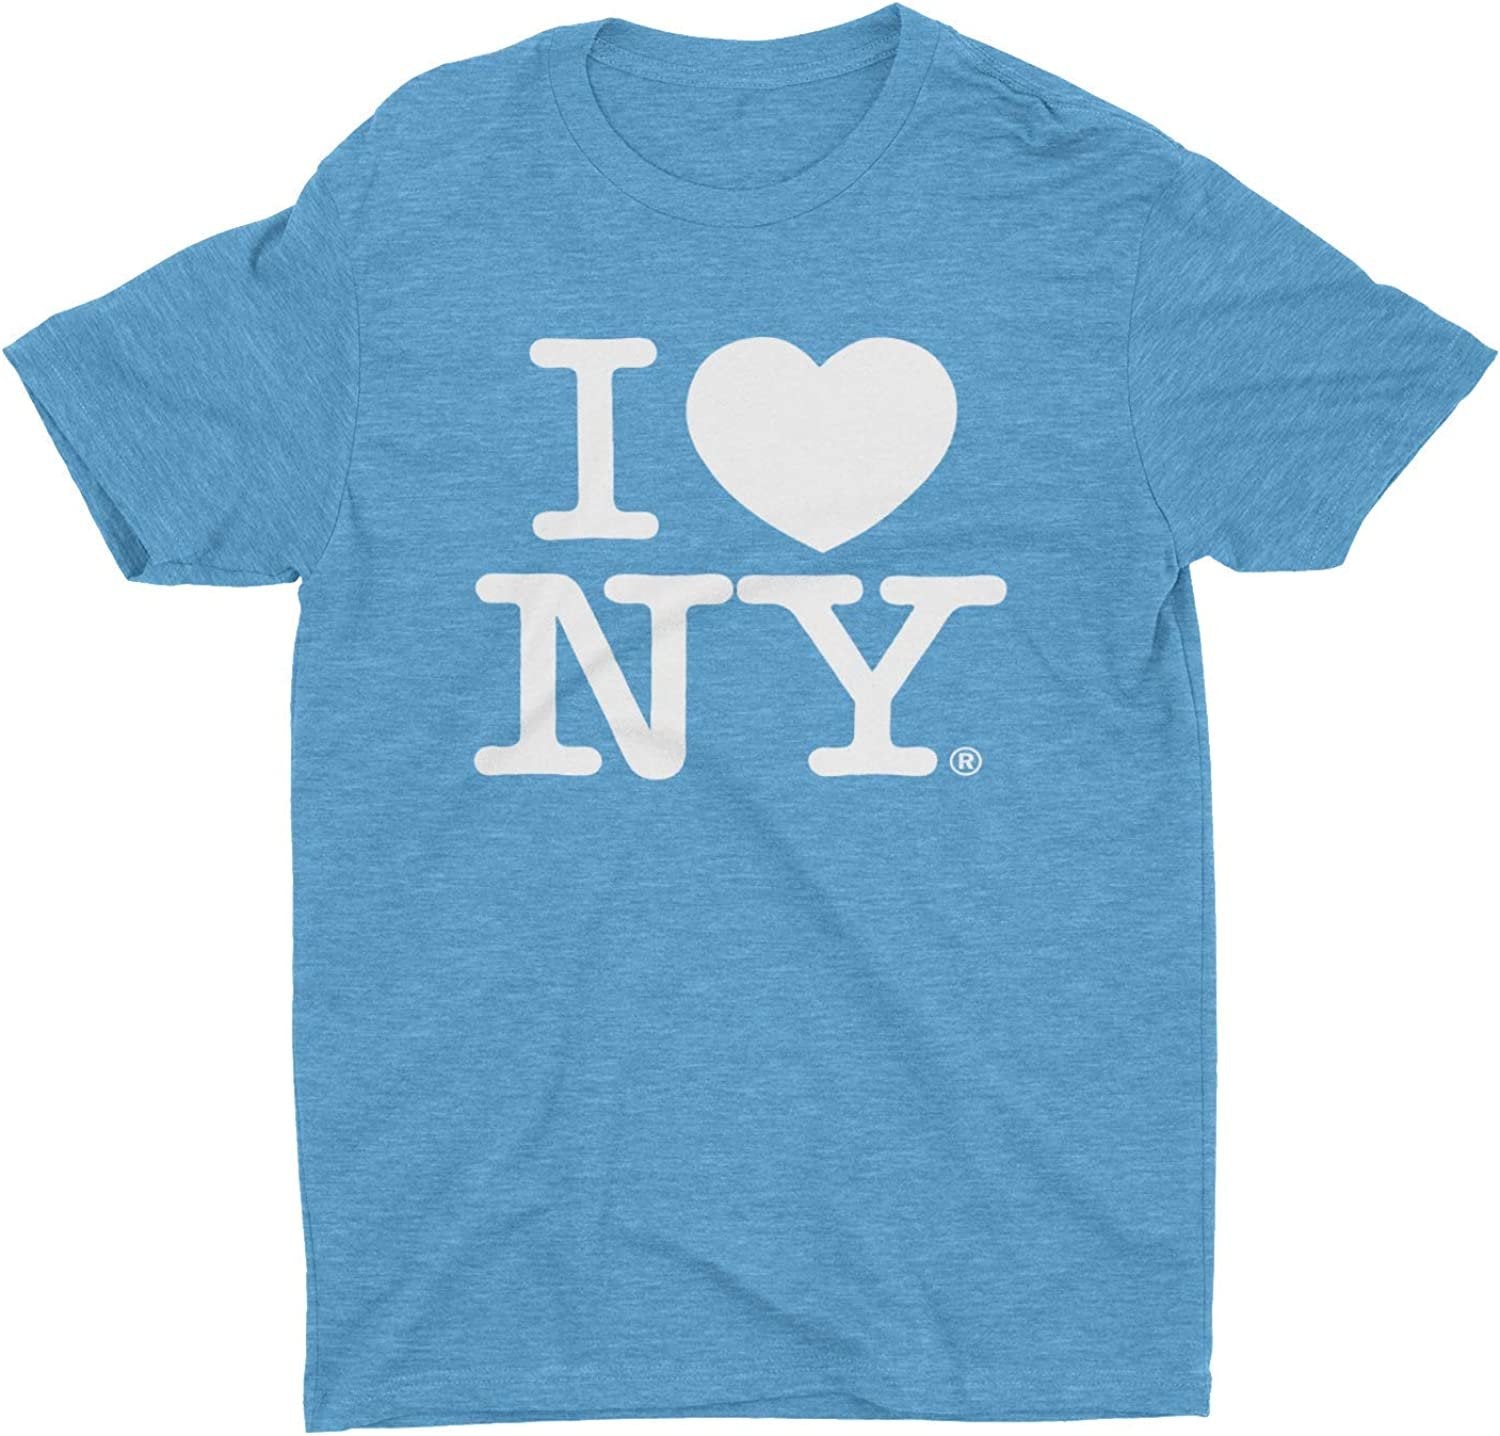 T-shirt rétro vintage I Love NY turquoise chiné